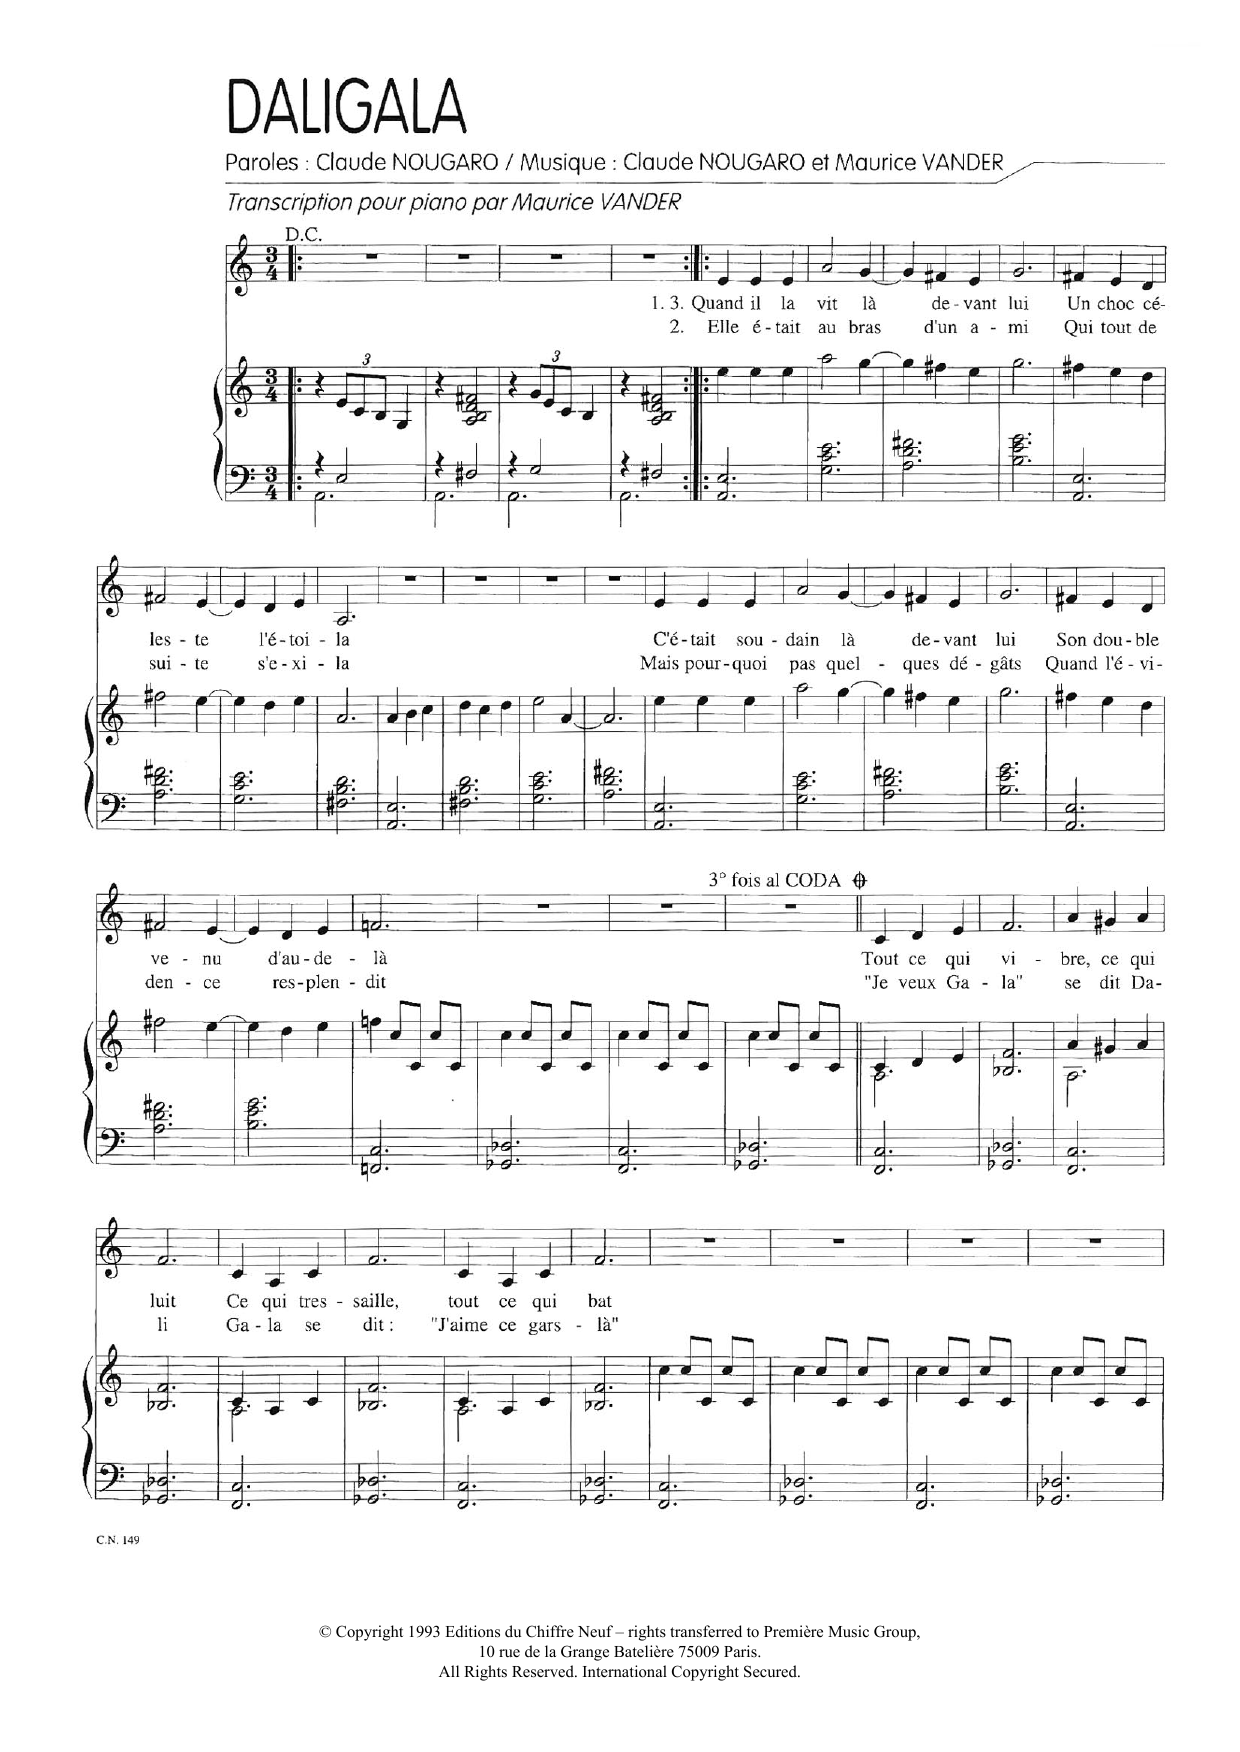 Claude Nougaro Daligala Sheet Music Notes & Chords for Piano & Vocal - Download or Print PDF